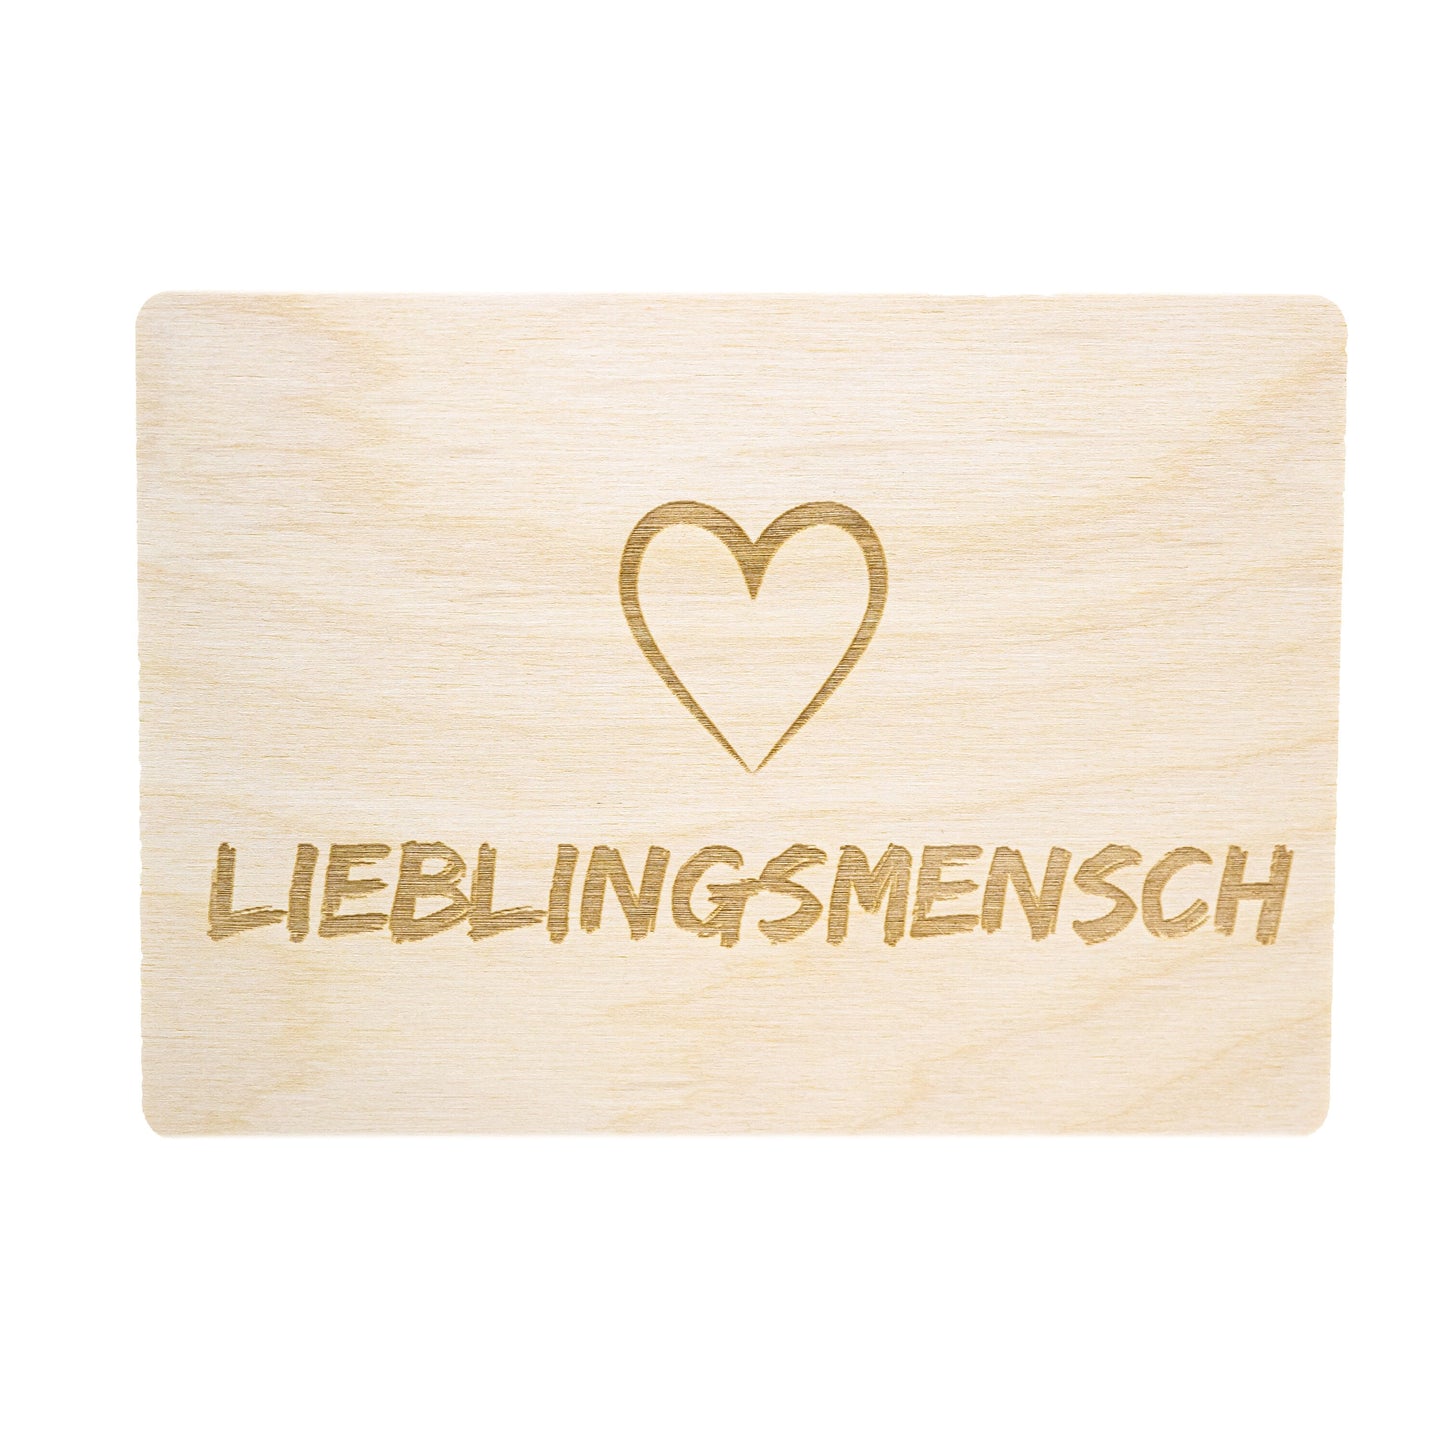 Holzpostkarte • Lieblingsmensch • Herz • Postkarte aus Holz • Liebe • Romantik • Holzkarte Valentinstag